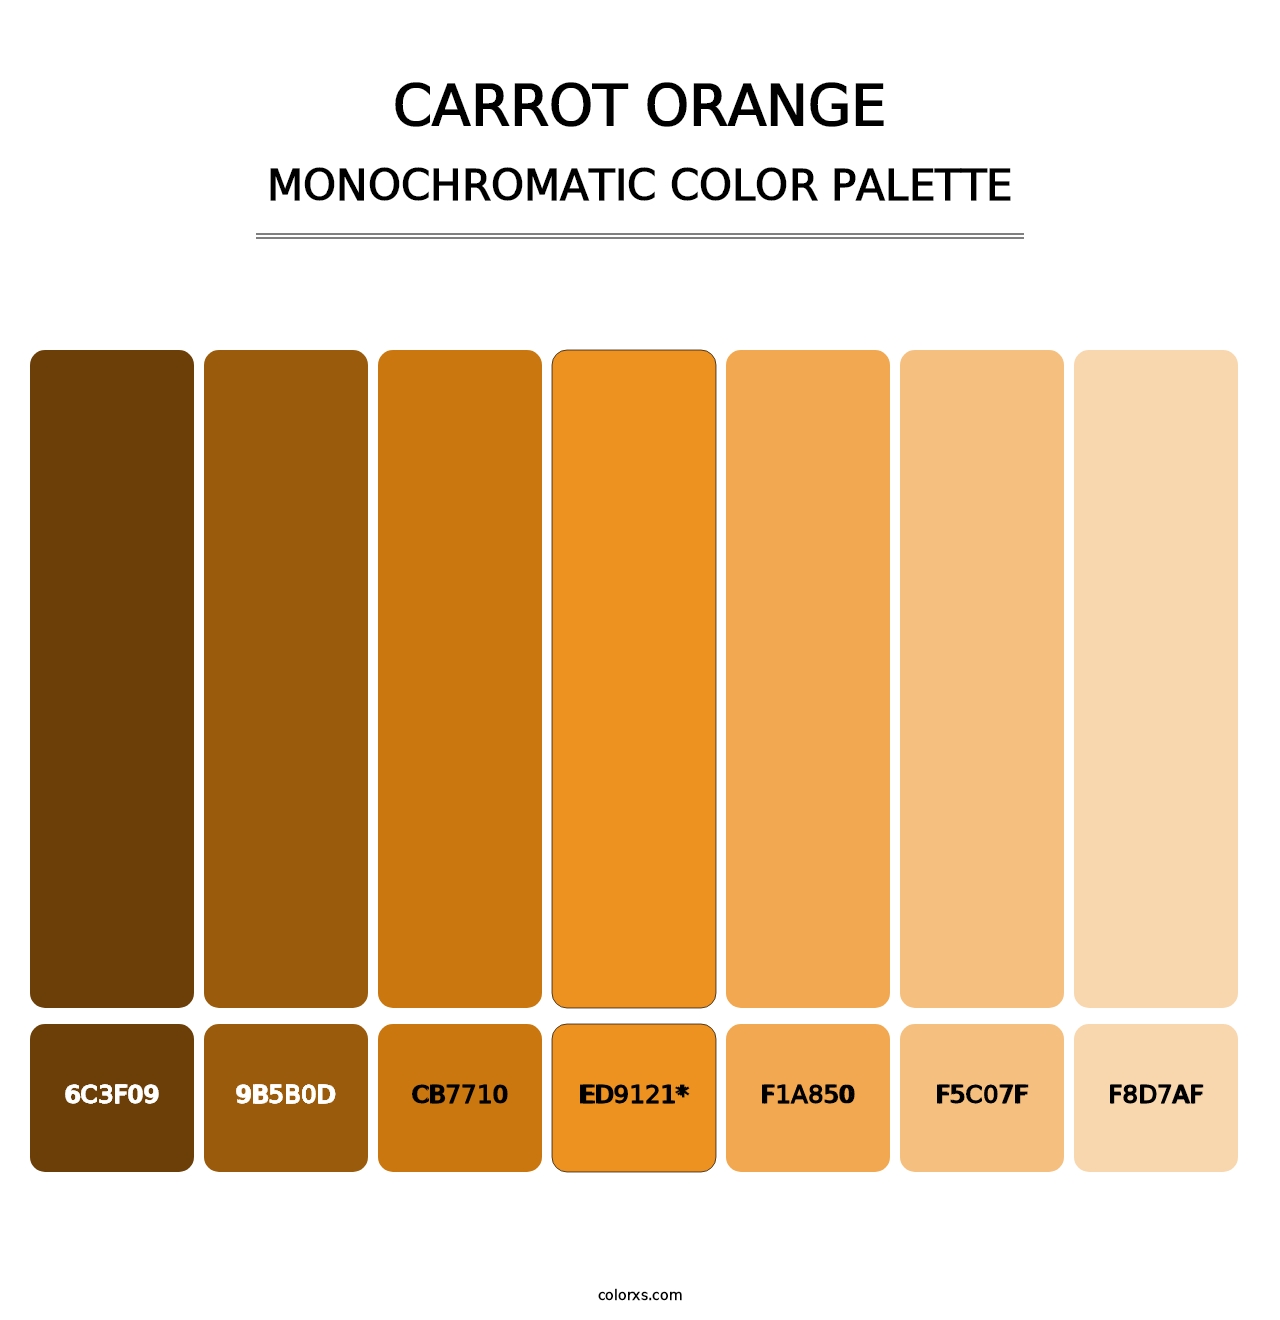 Carrot Orange - Monochromatic Color Palette